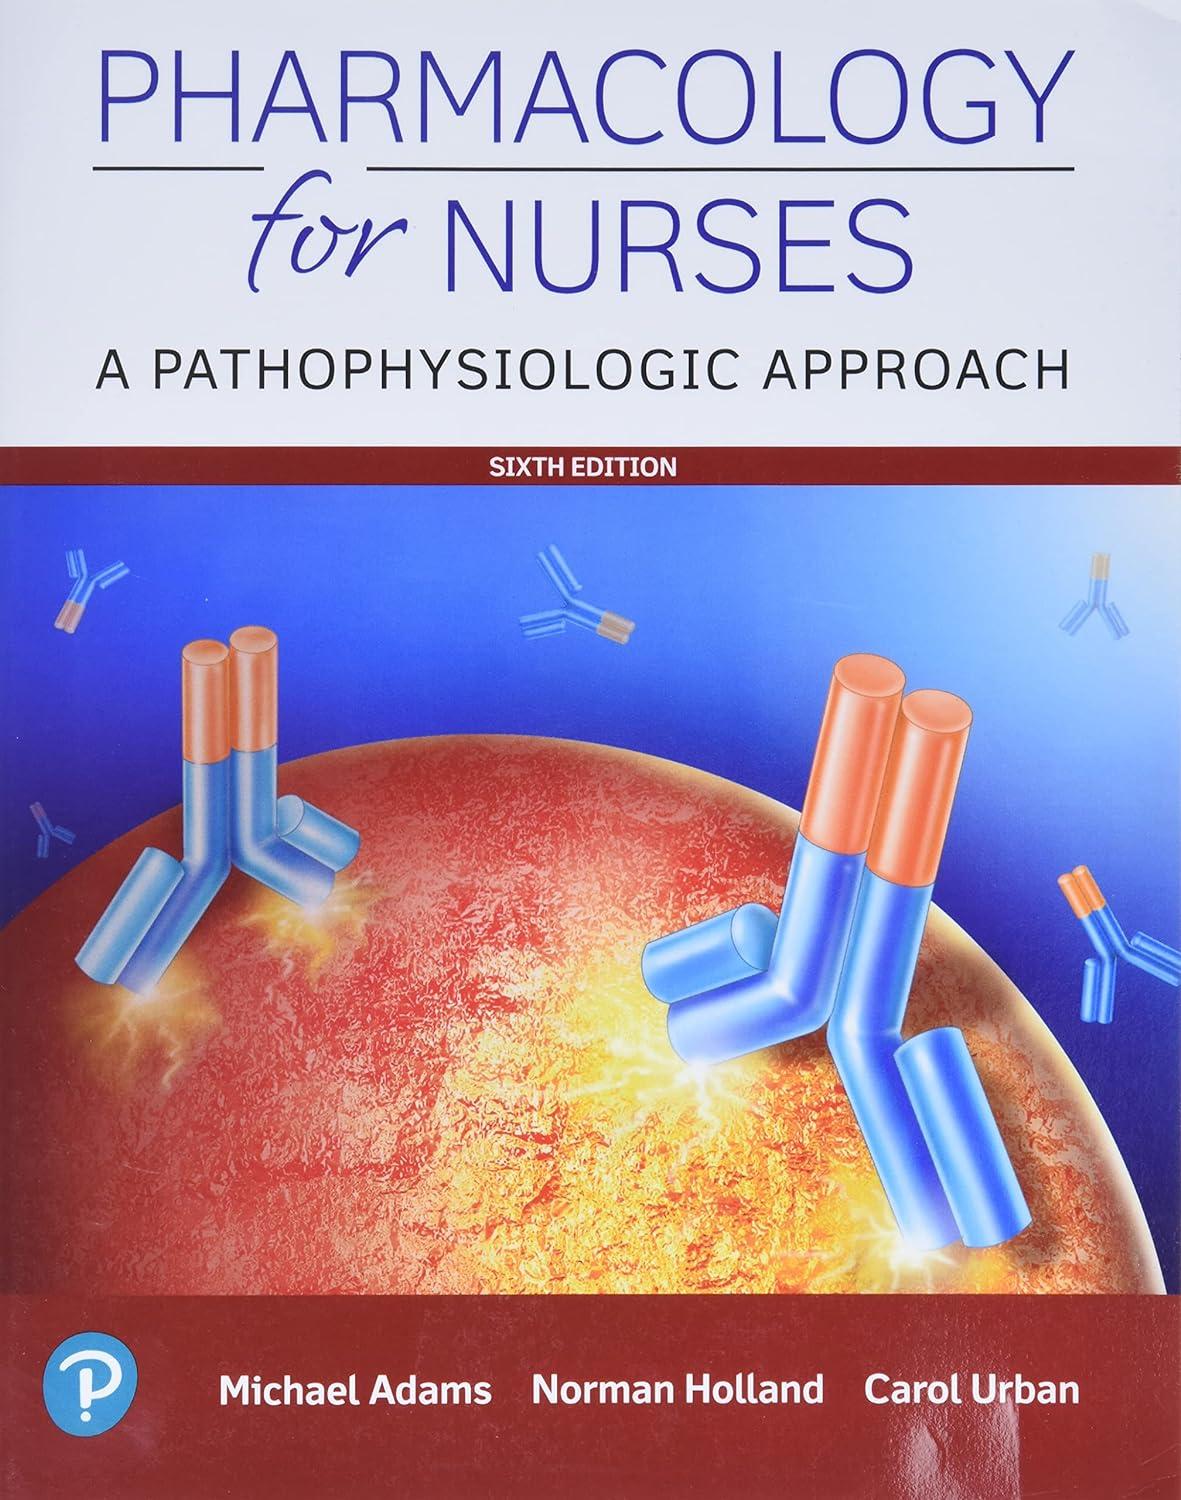 pharmacology for nurses a pathophysiologic approach 6th edition michael adams, norman holland, carol urban